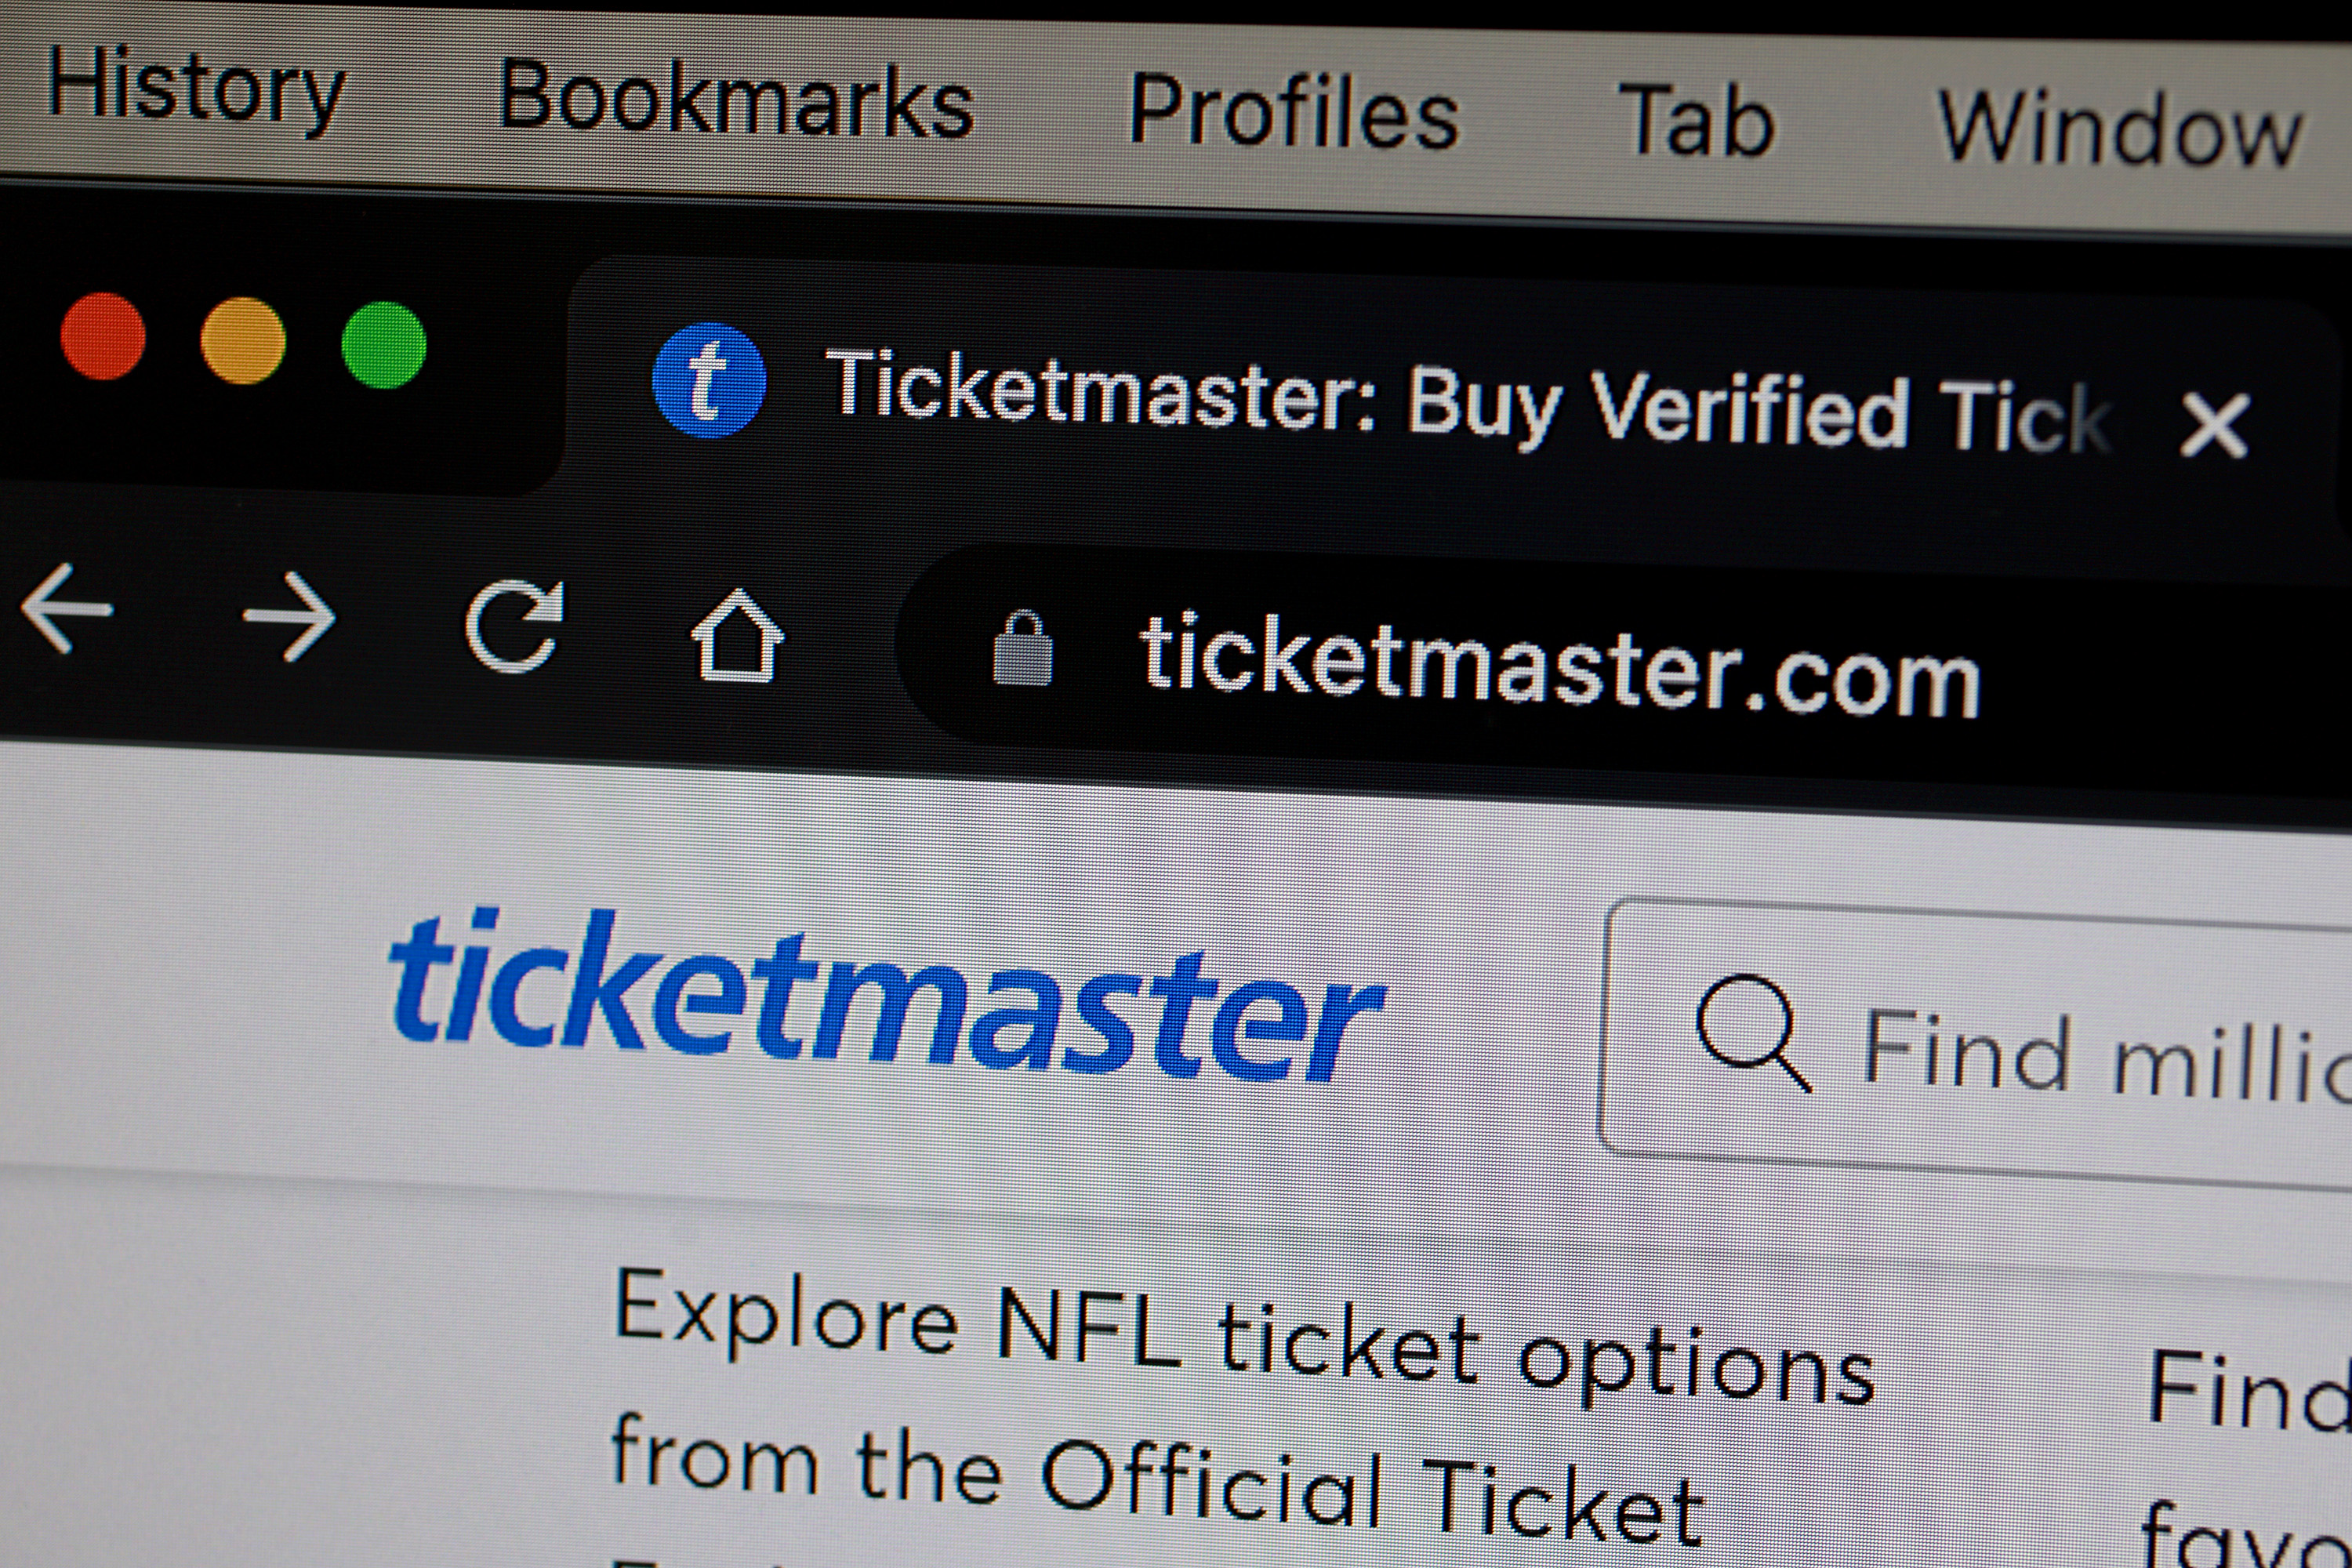 DOJ probing Live Nation and Ticketmaster for antitrust violations